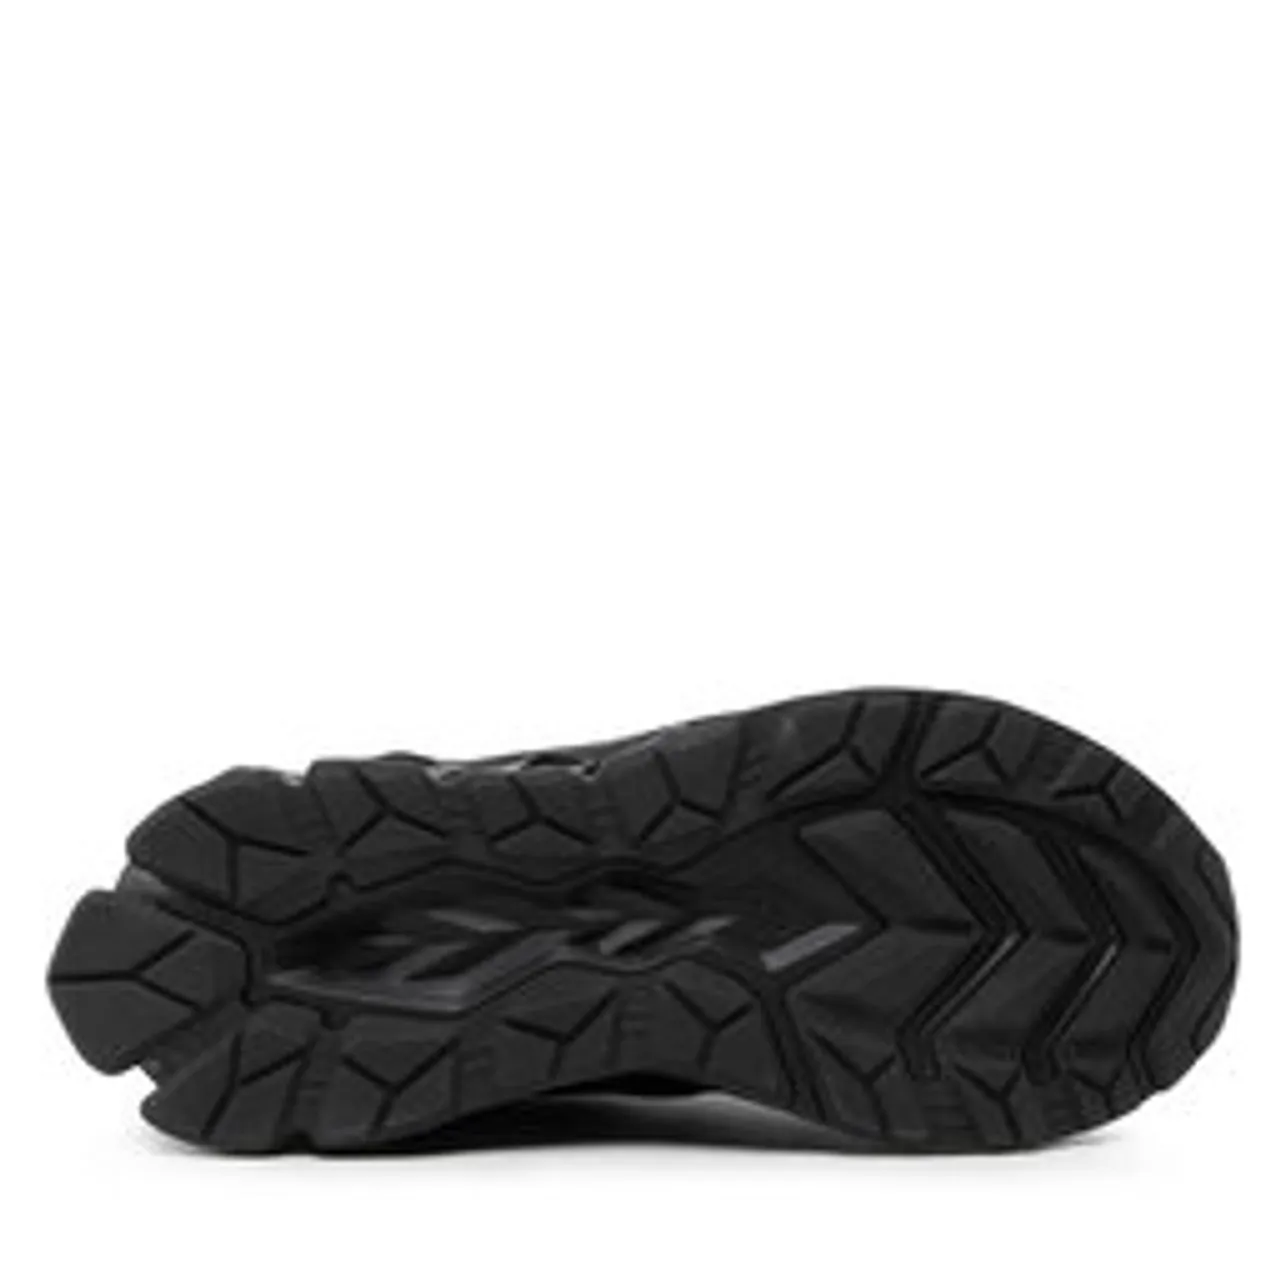 Sneakers Asics Gel-Quantum 180 VII 1201A631 Black/Black 001